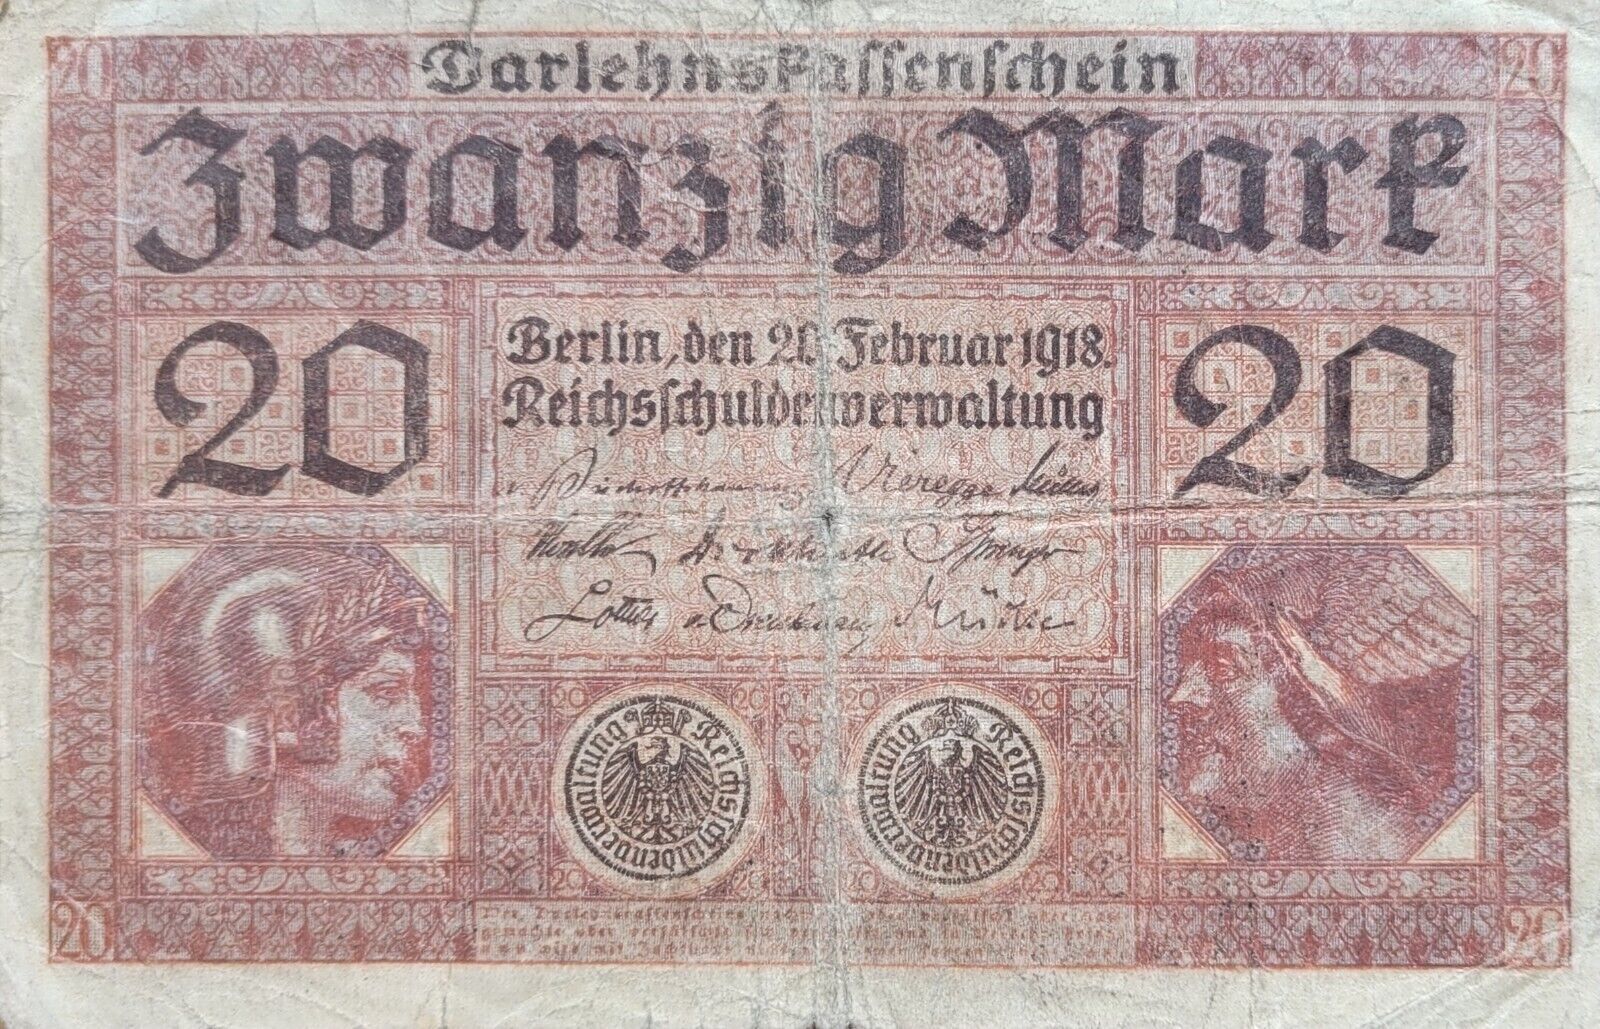 GERMANY 20 MARK REICHSBANKNOTE 1918 VERY RARE NO RESERVE - $9.46